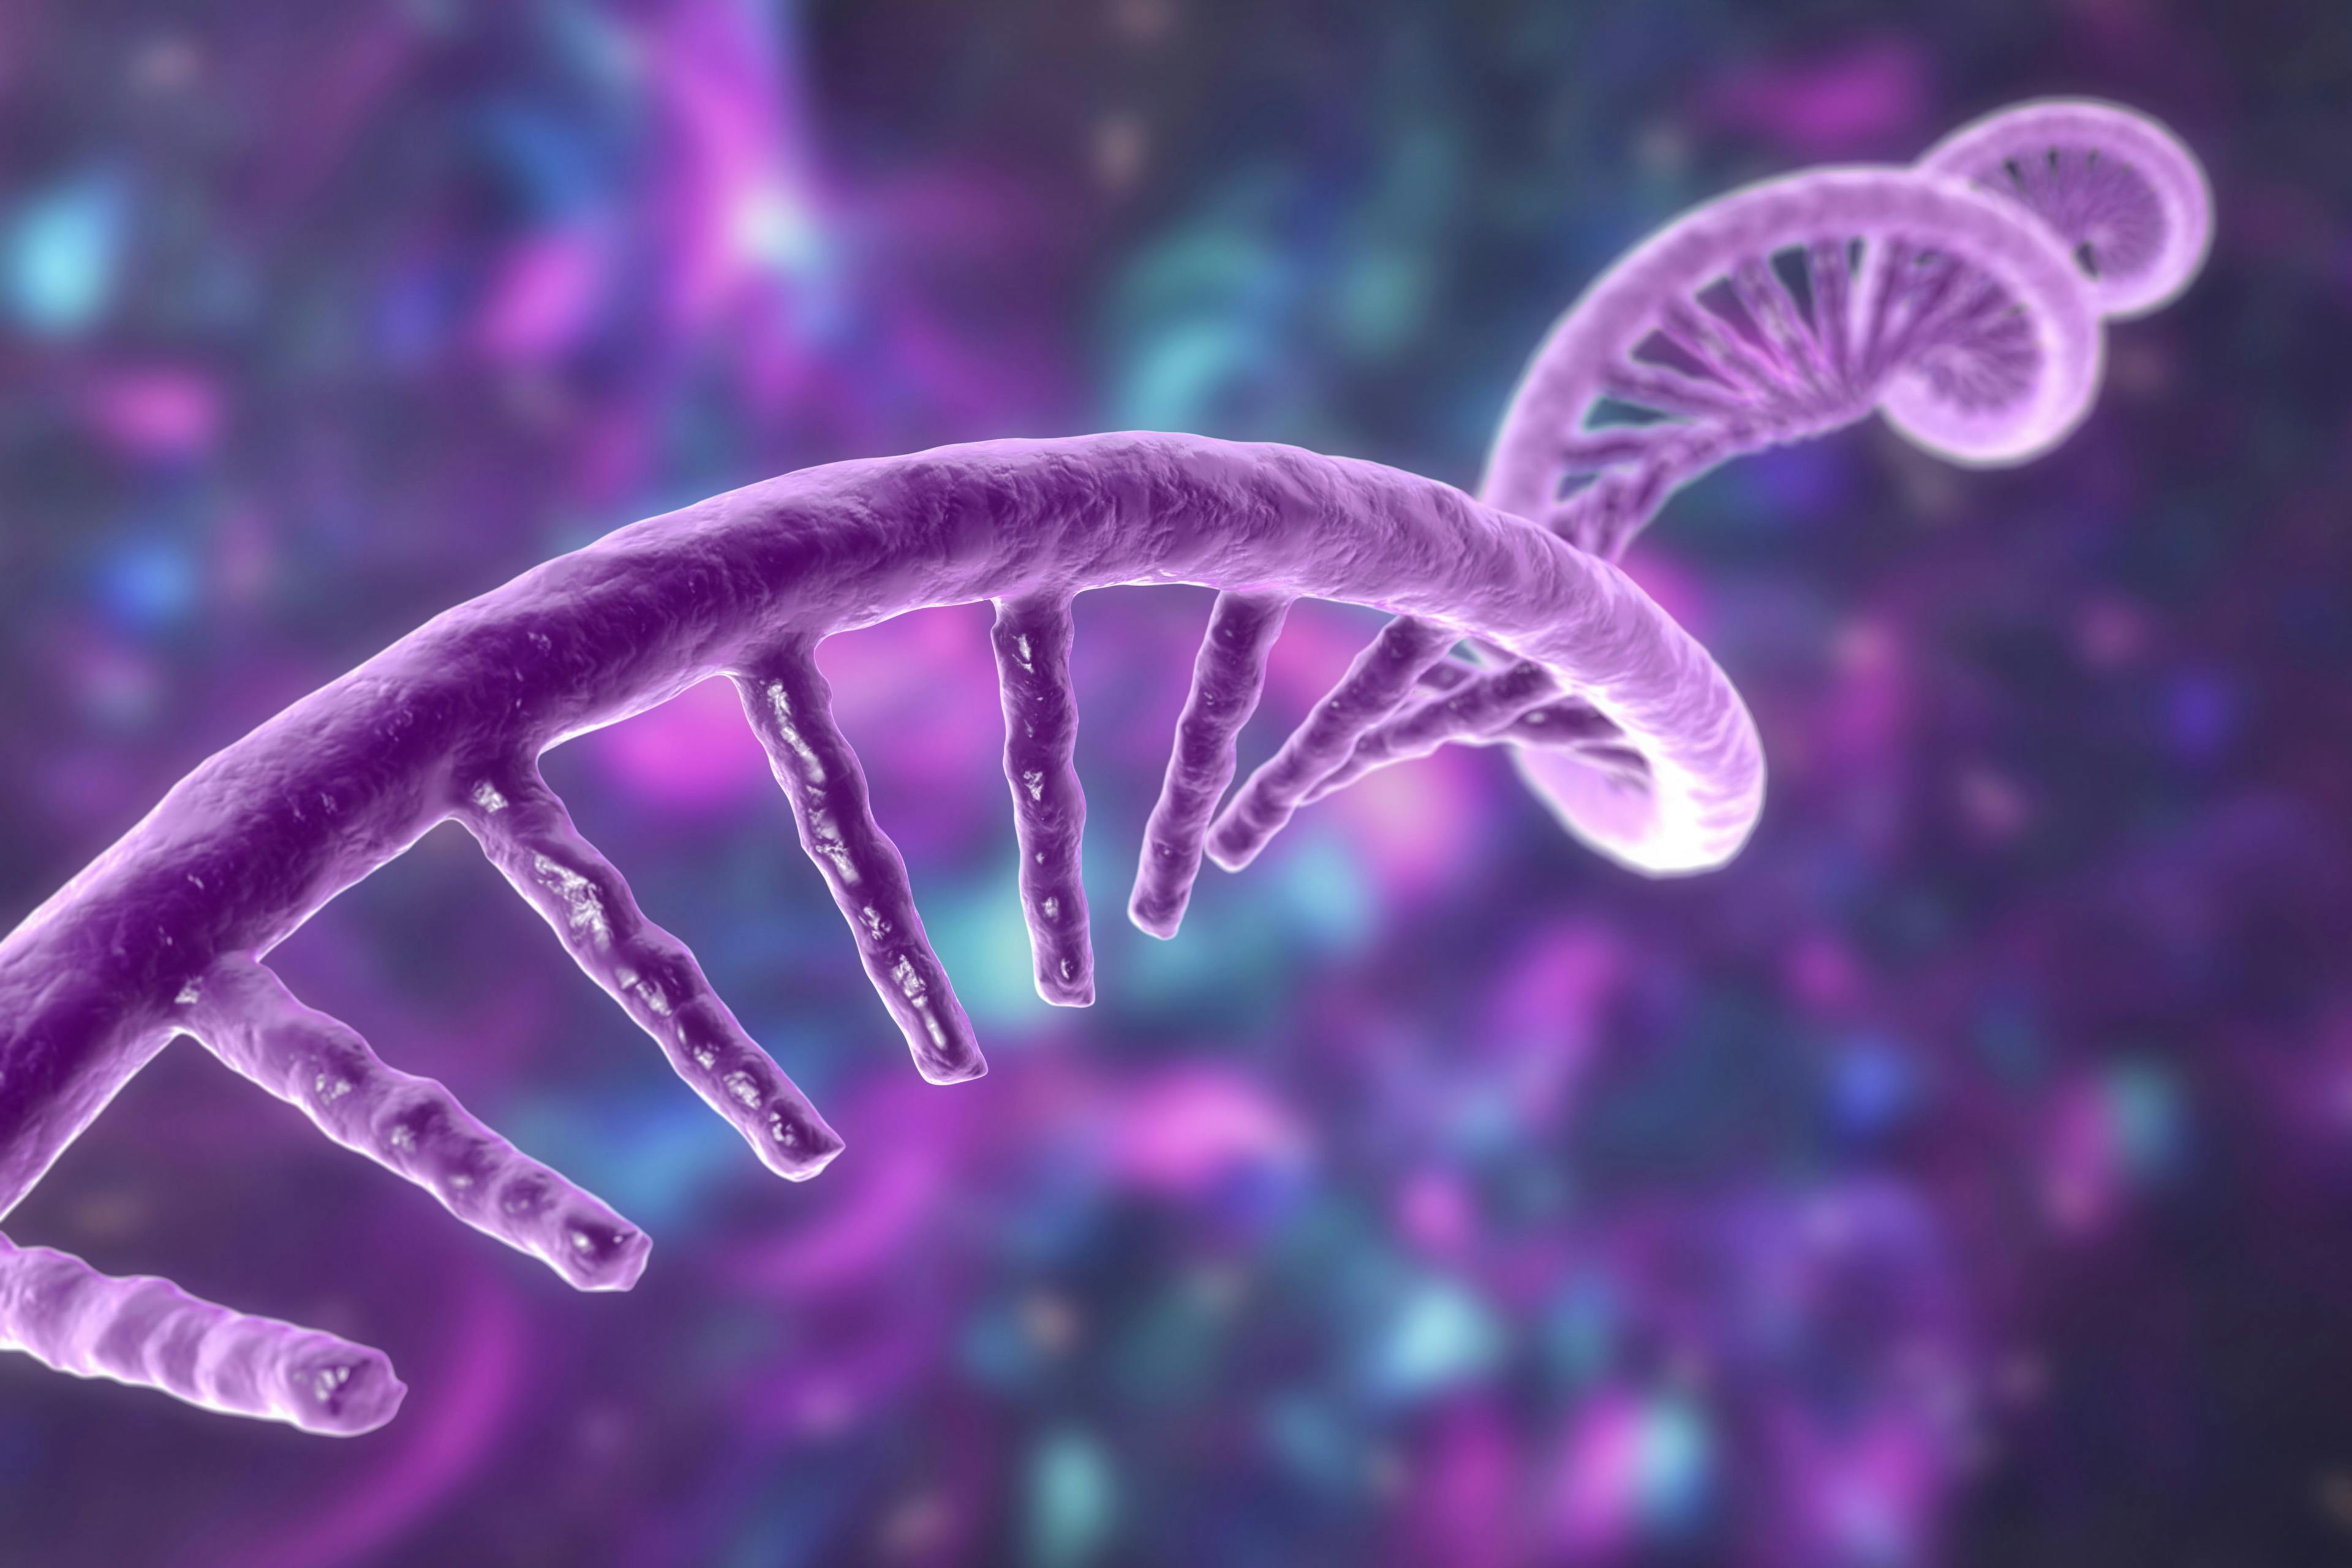 Molecule of mRNA, 3D illustration | Image Credit: © Dr_Microbe - stock.adobe.com